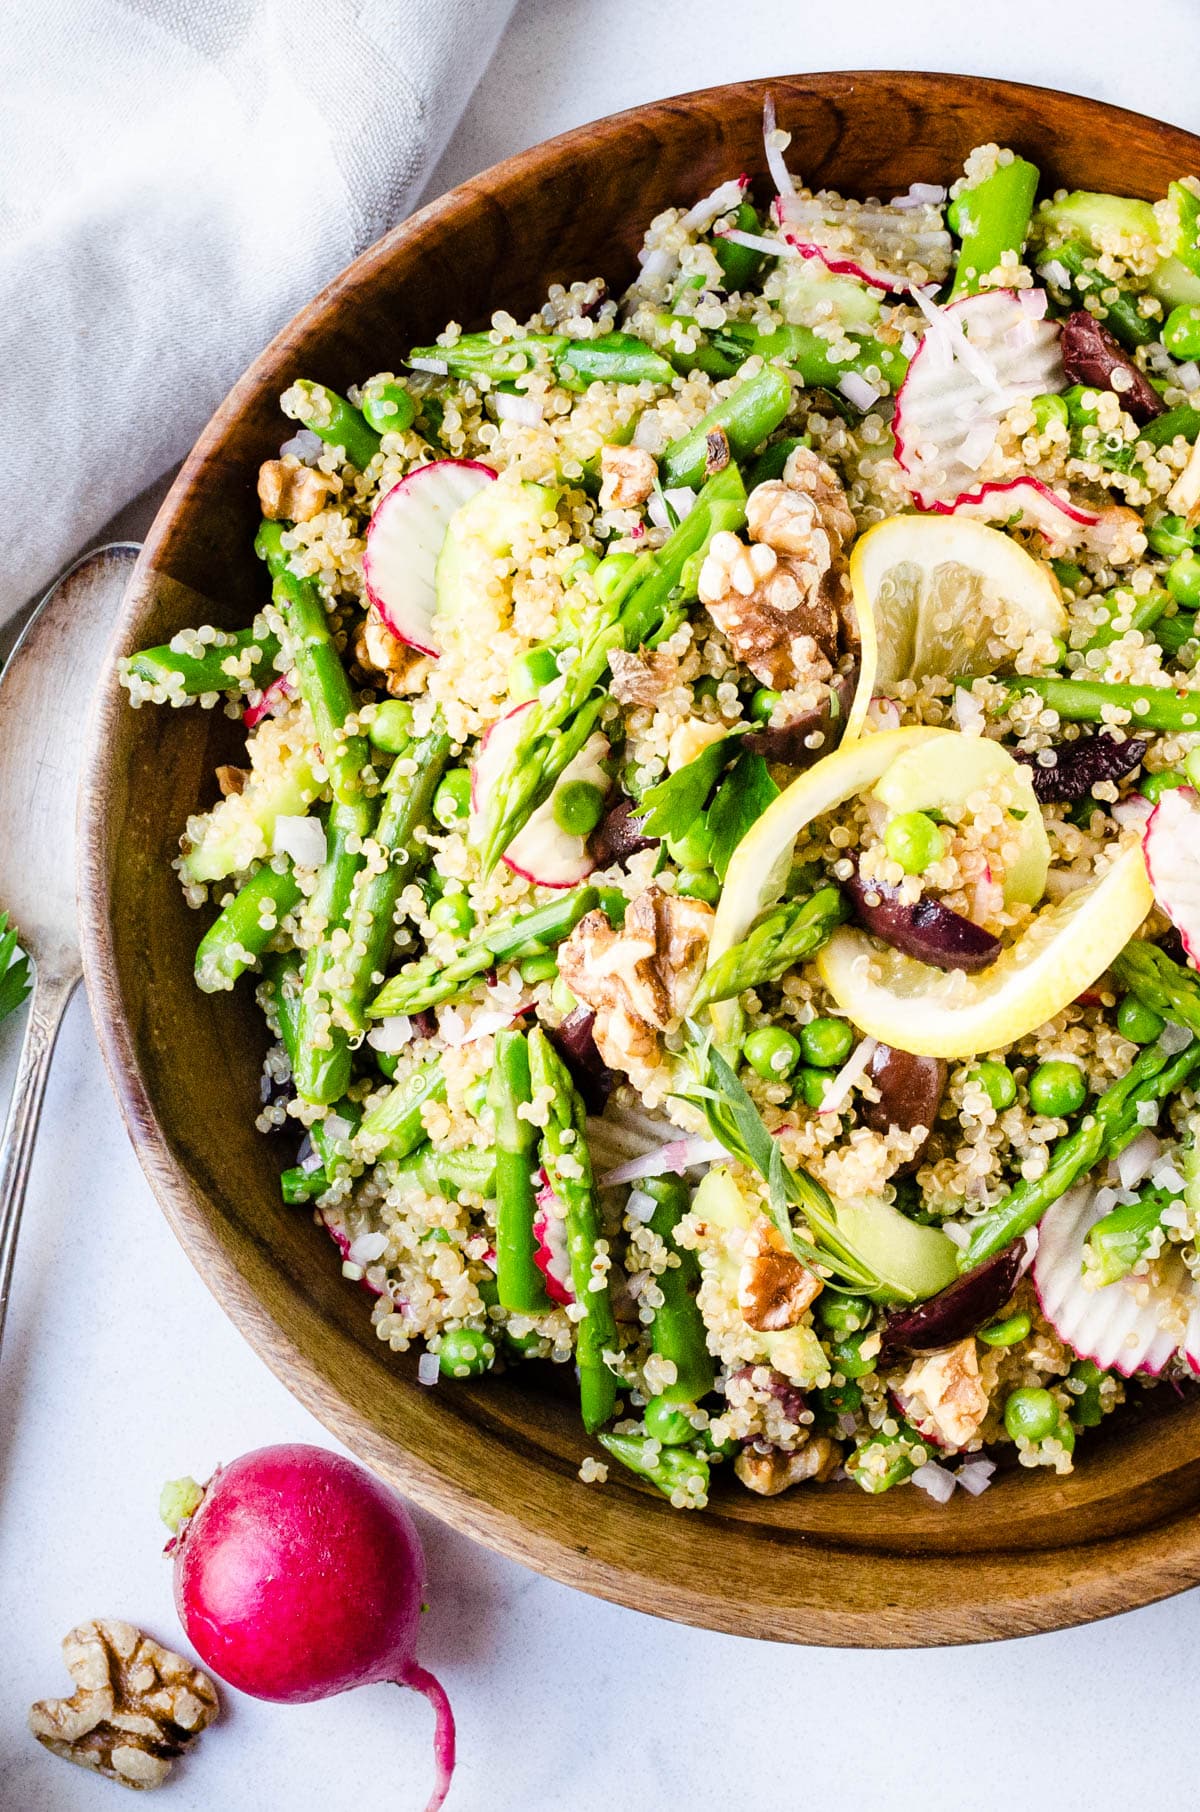 Dressed quinoa salad with asparagus, peas, kalamata olives, radishes and walnuts. 